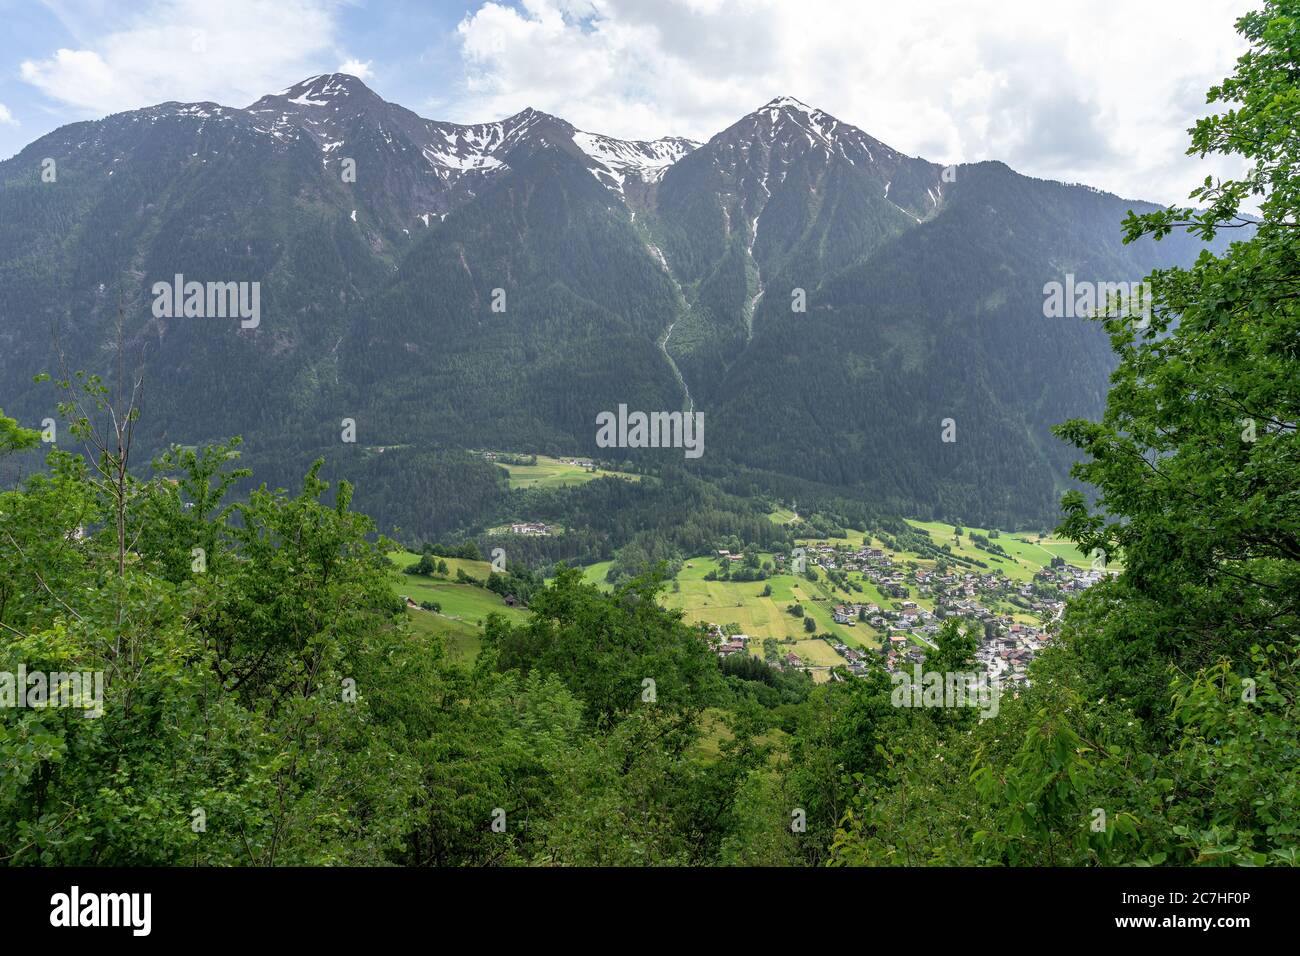 Europe, Austria, Tyrol, Ötztal Alps, Ötztal, view of Sautens in the Ötztal and the surrounding mountains Stock Photo